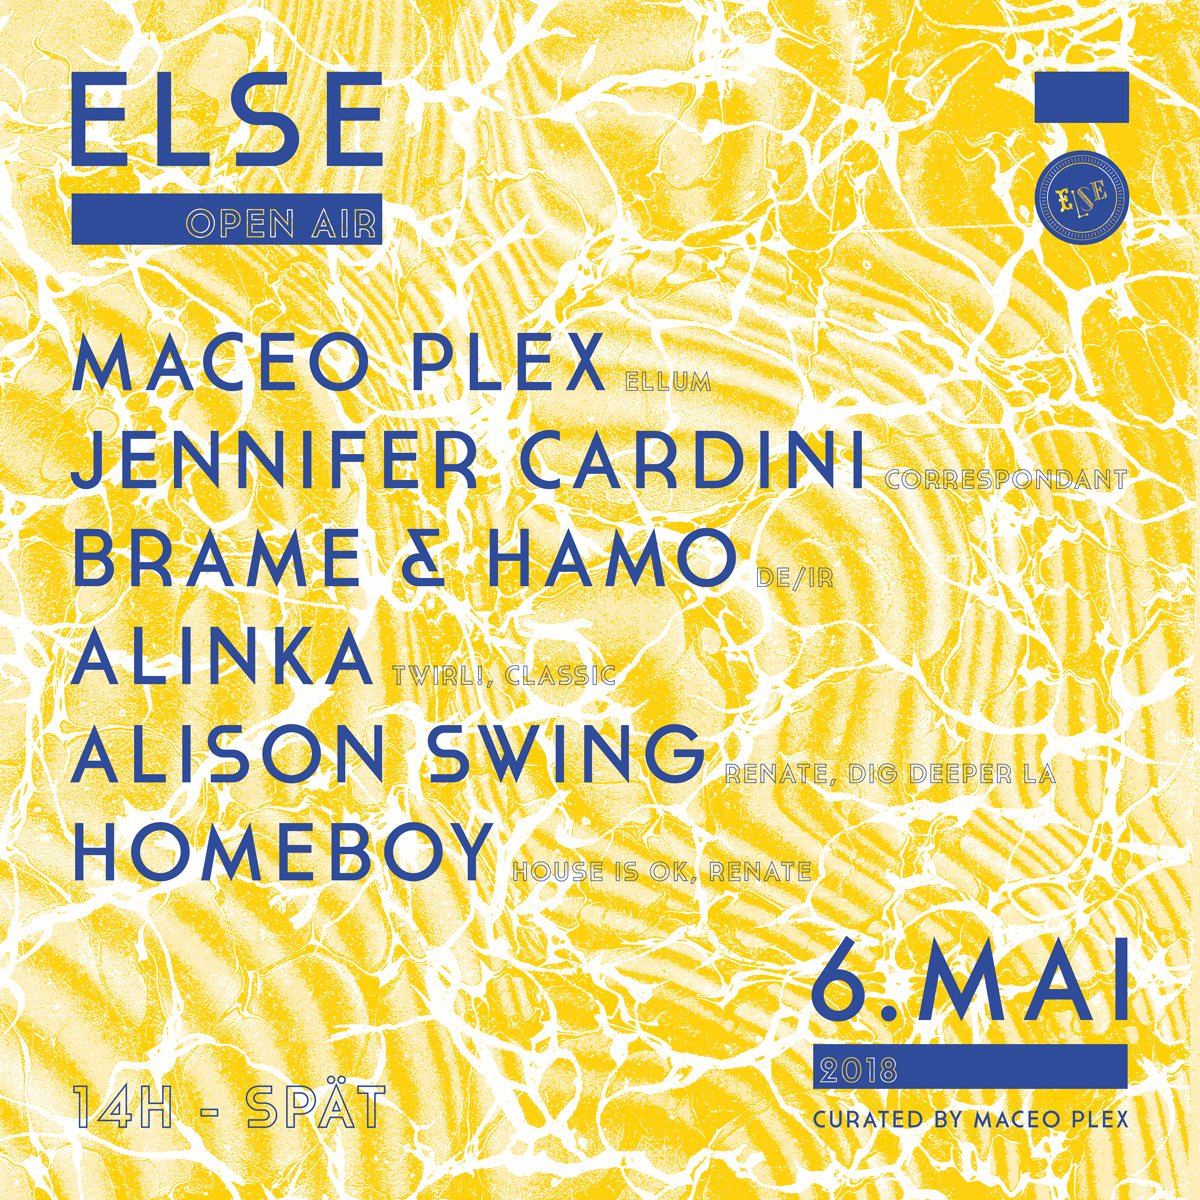 Else Open Air /w. Maceo Plex, Brame & Hamo, Jennifer Cardini & More - Flyer front